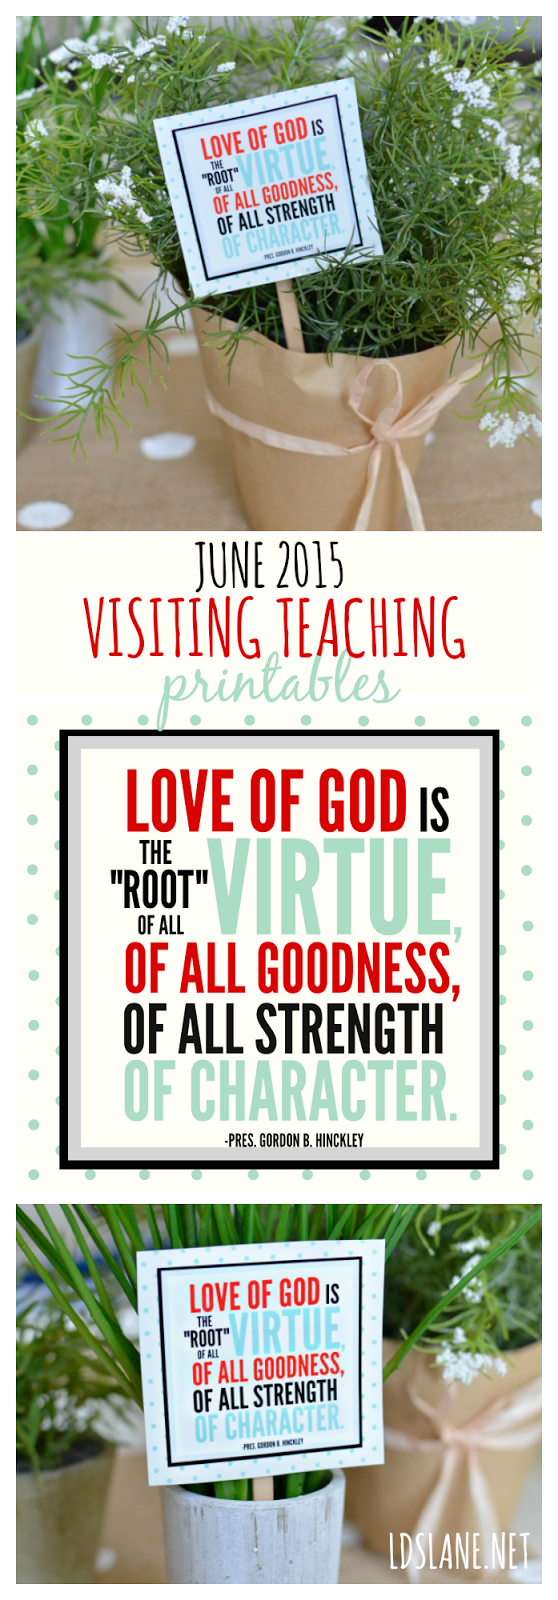 June 2015 Visiting Teaching Printables - ldslane.net